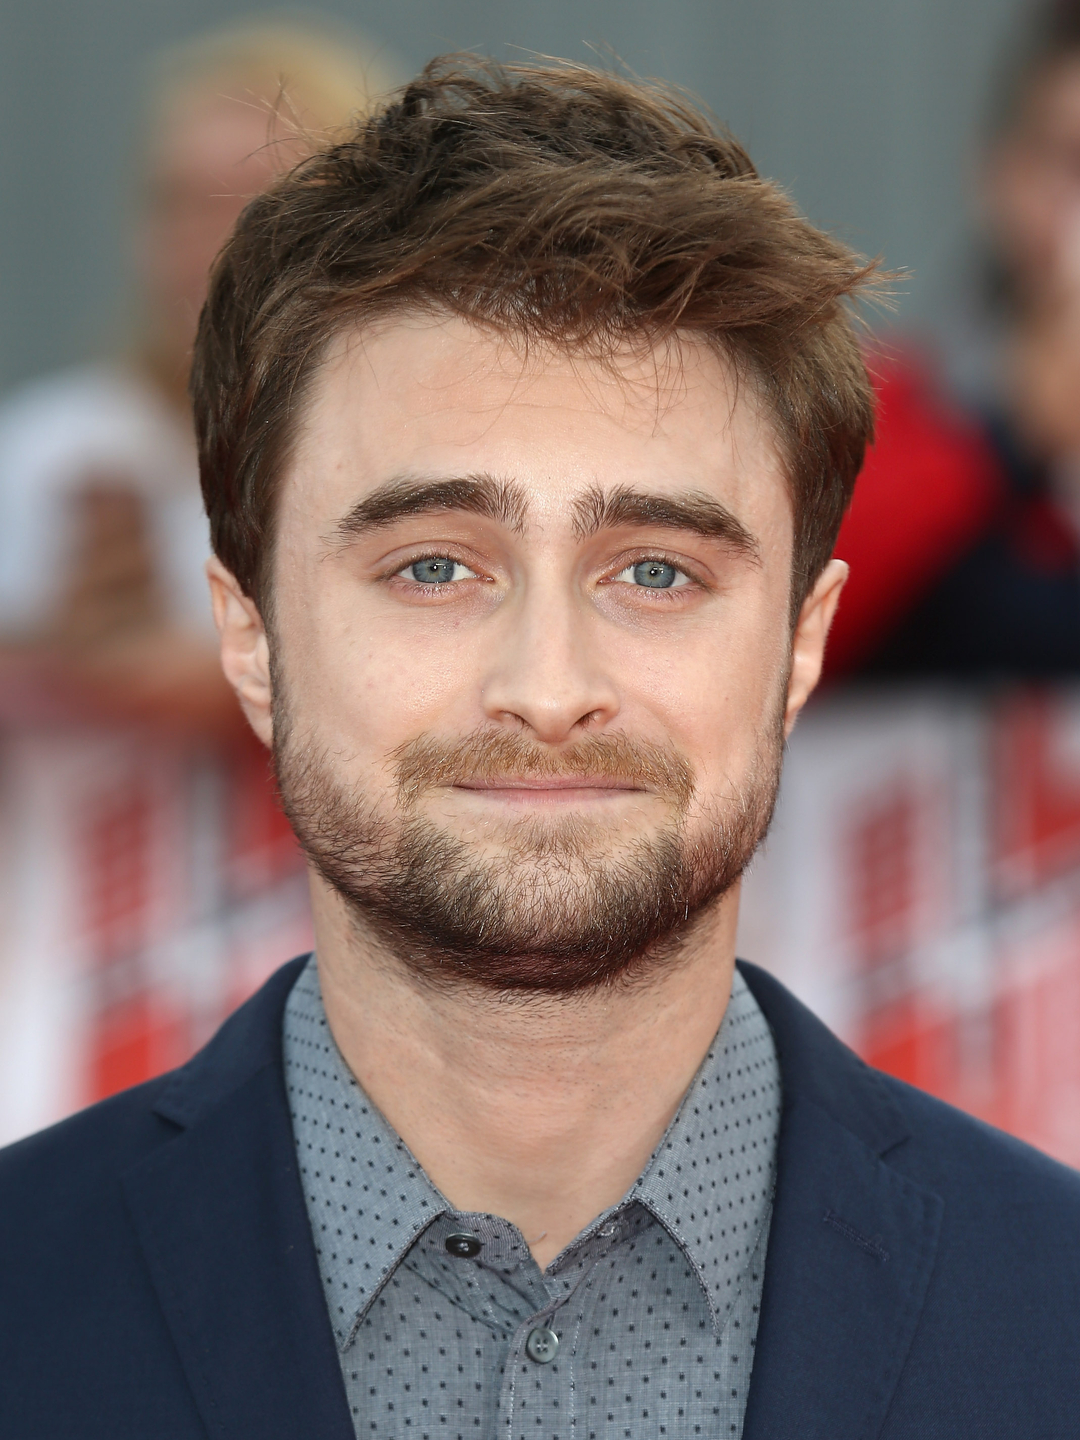 Daniel Radcliffe early career